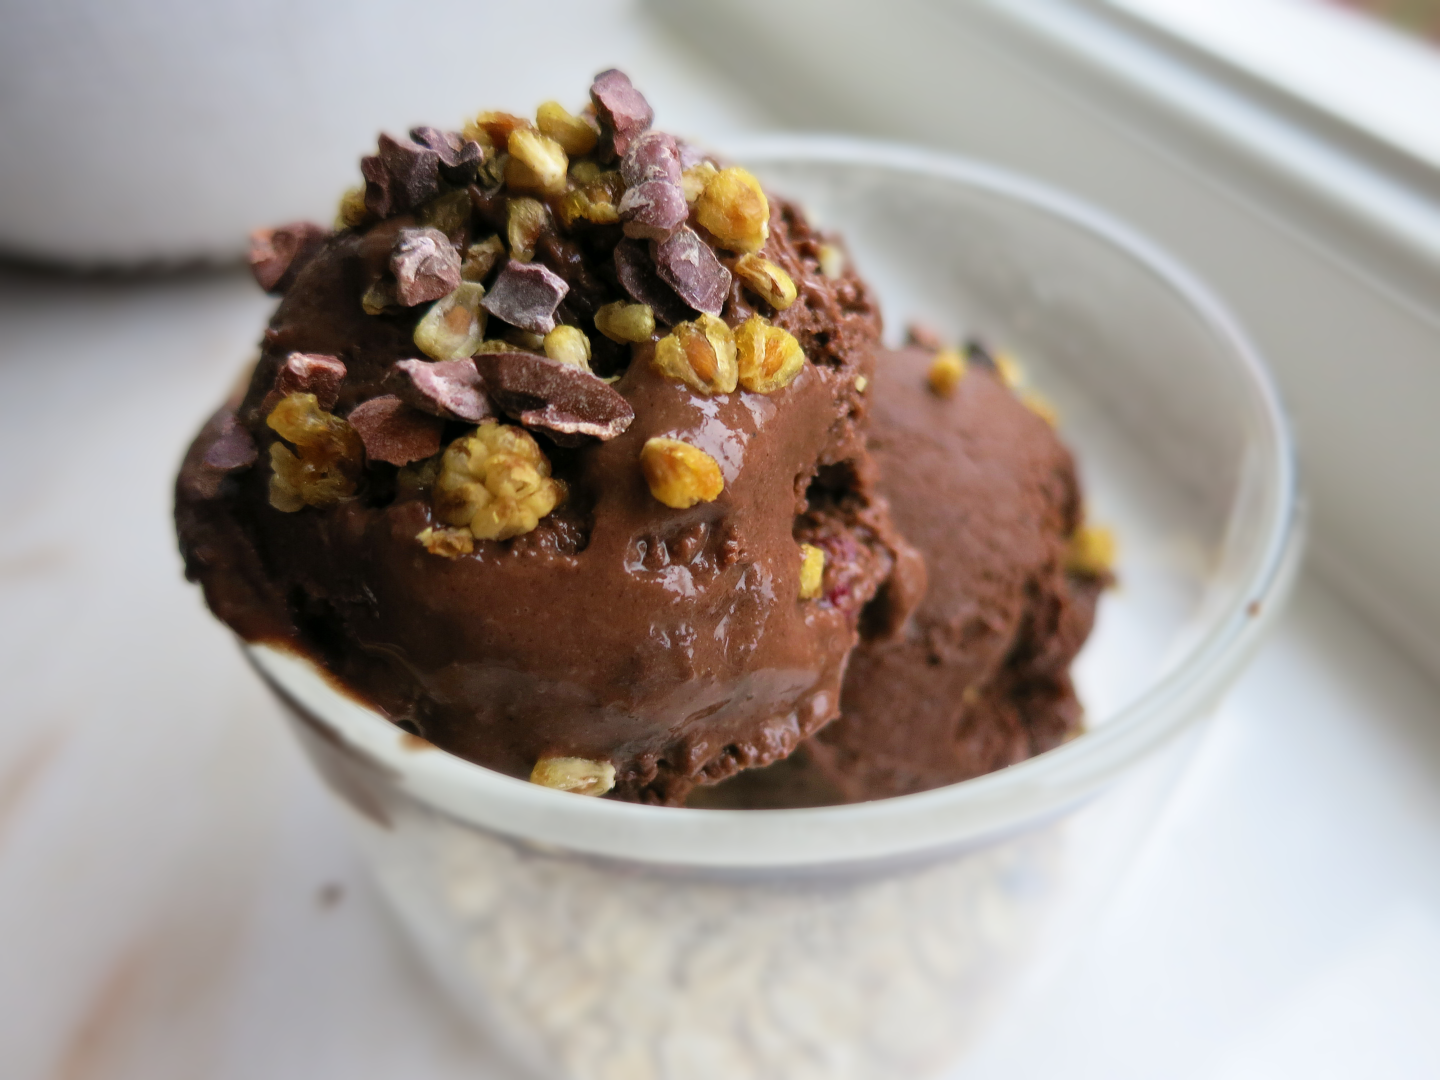 Creamiest chocolate ice cream